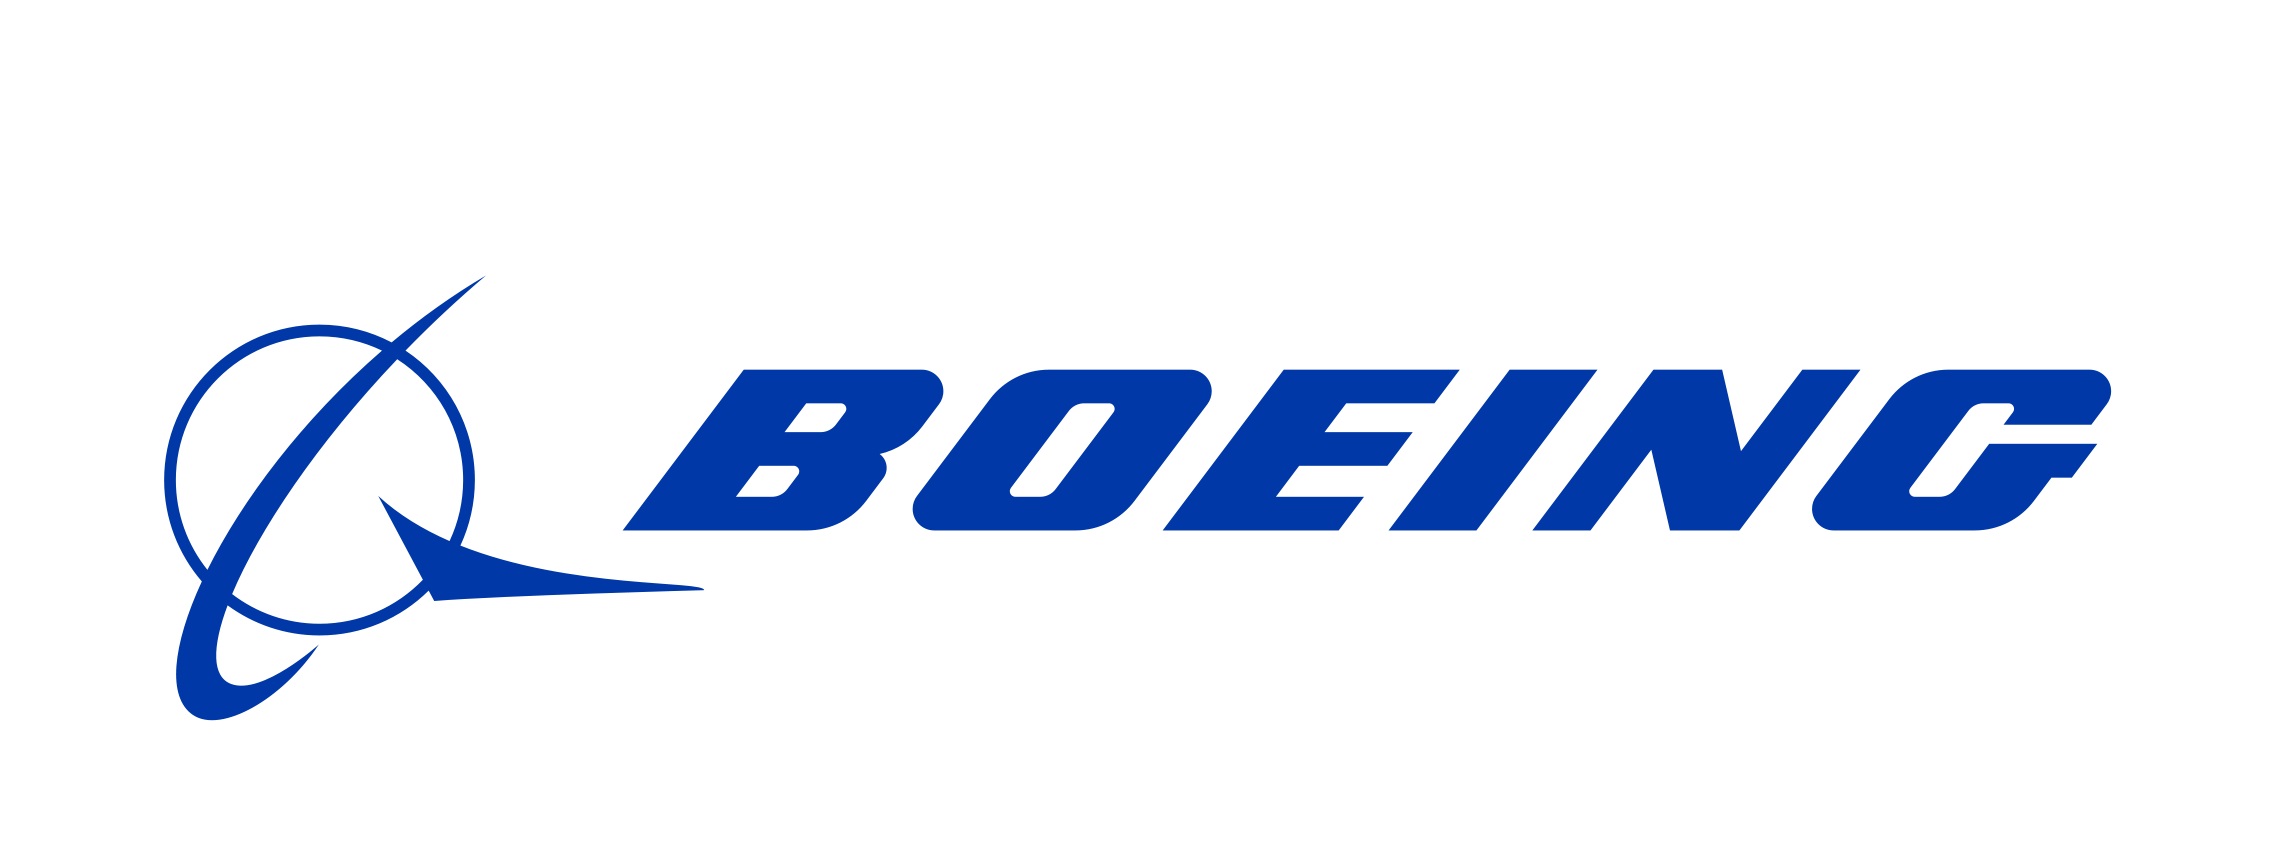 Boeing Silver Sponsor